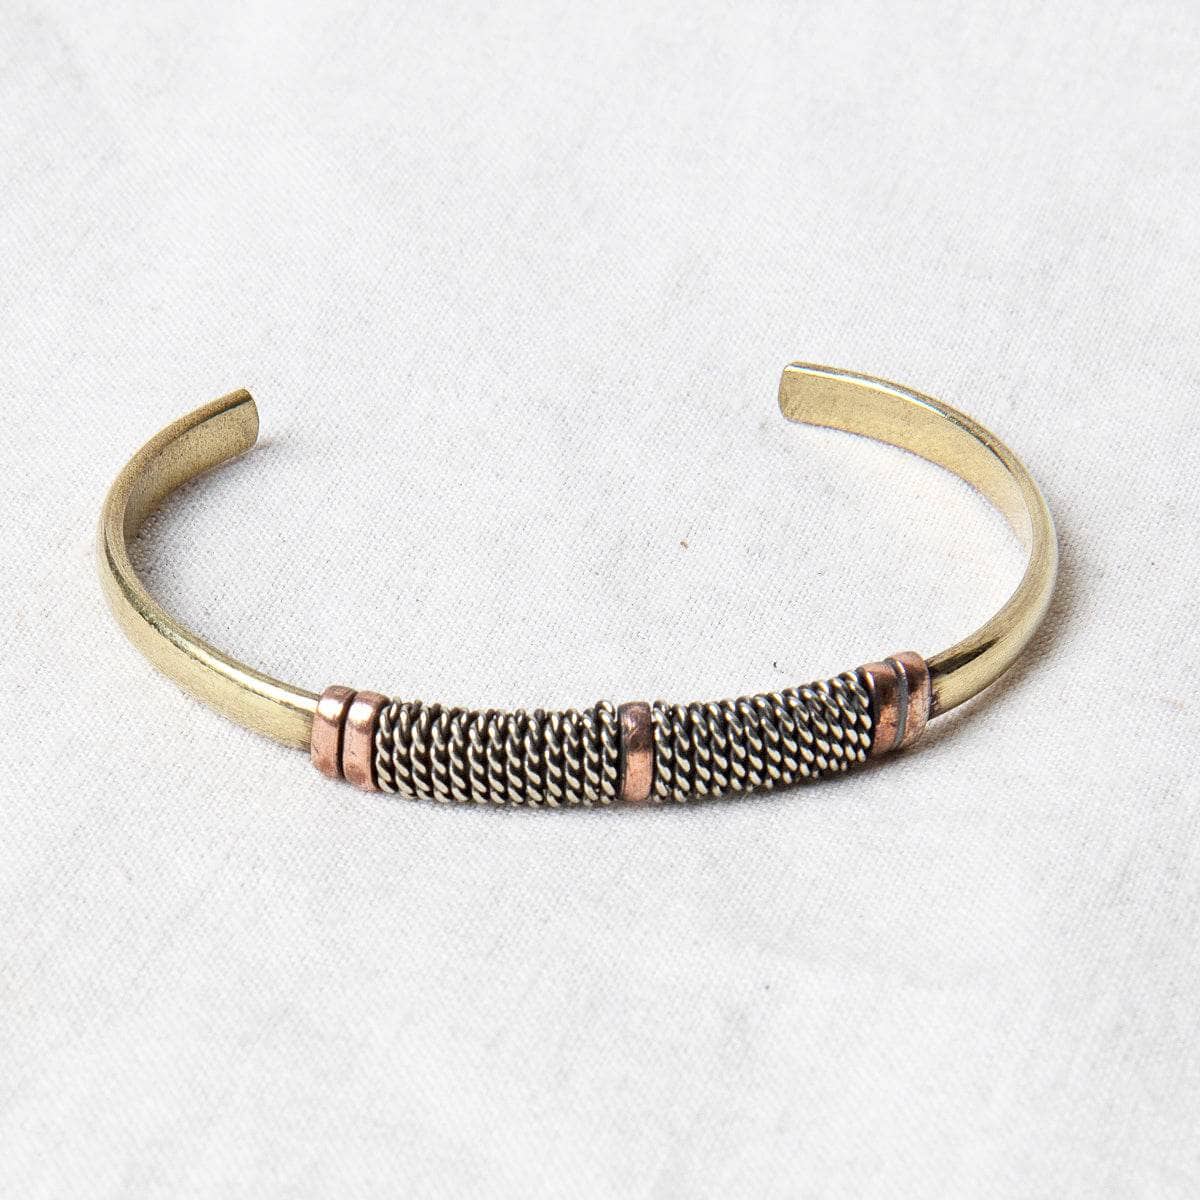 Details more than 80 copper bead bracelet super hot - ceg.edu.vn